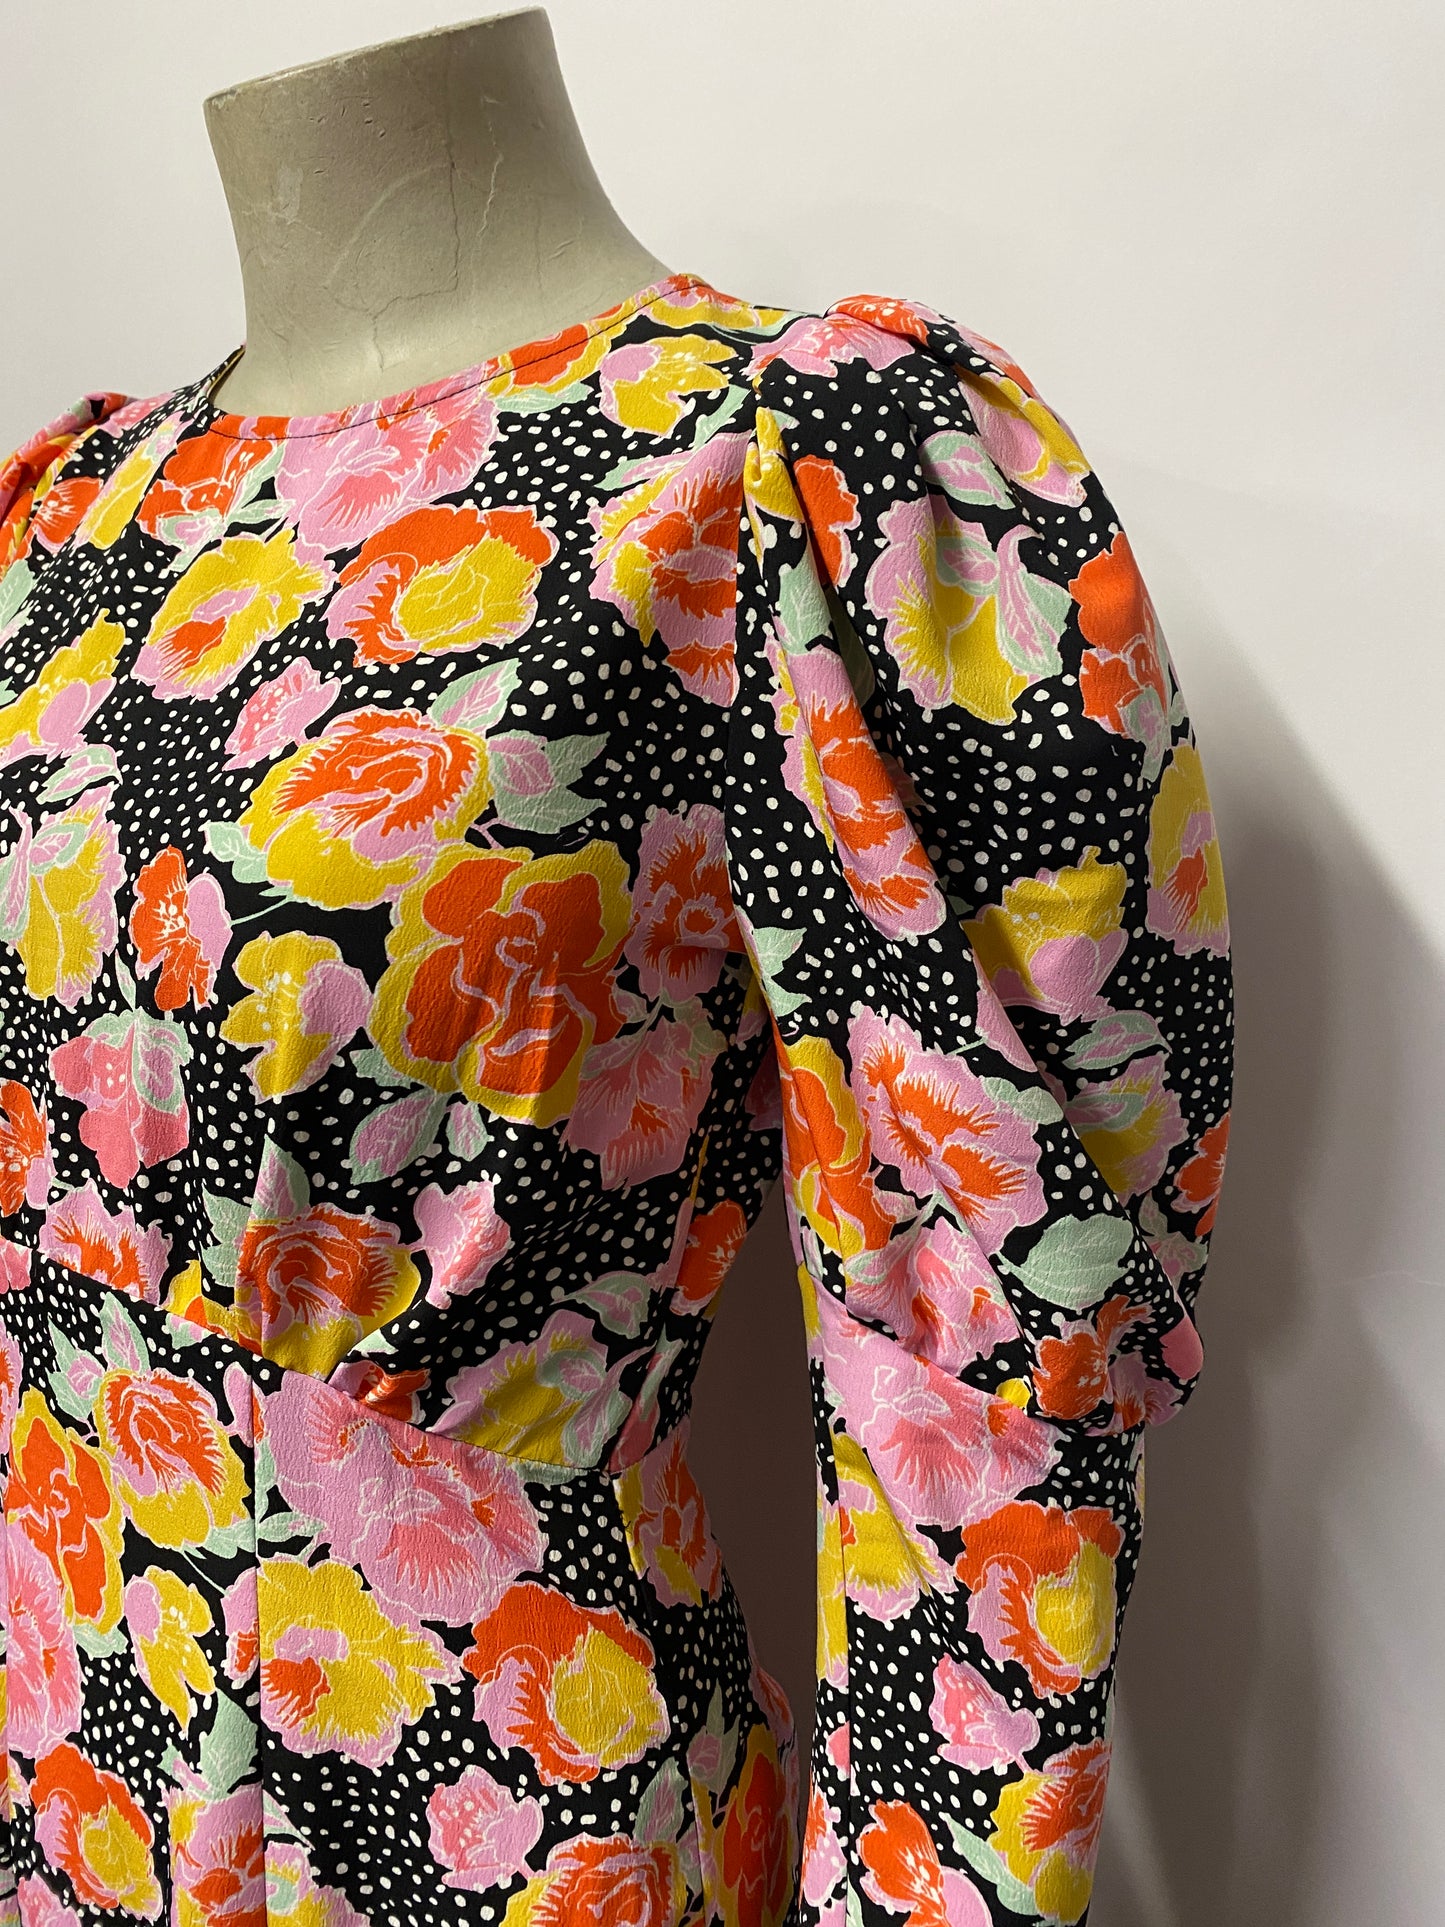 Topshop Multicolour Floral Tea Dress BNWT 6